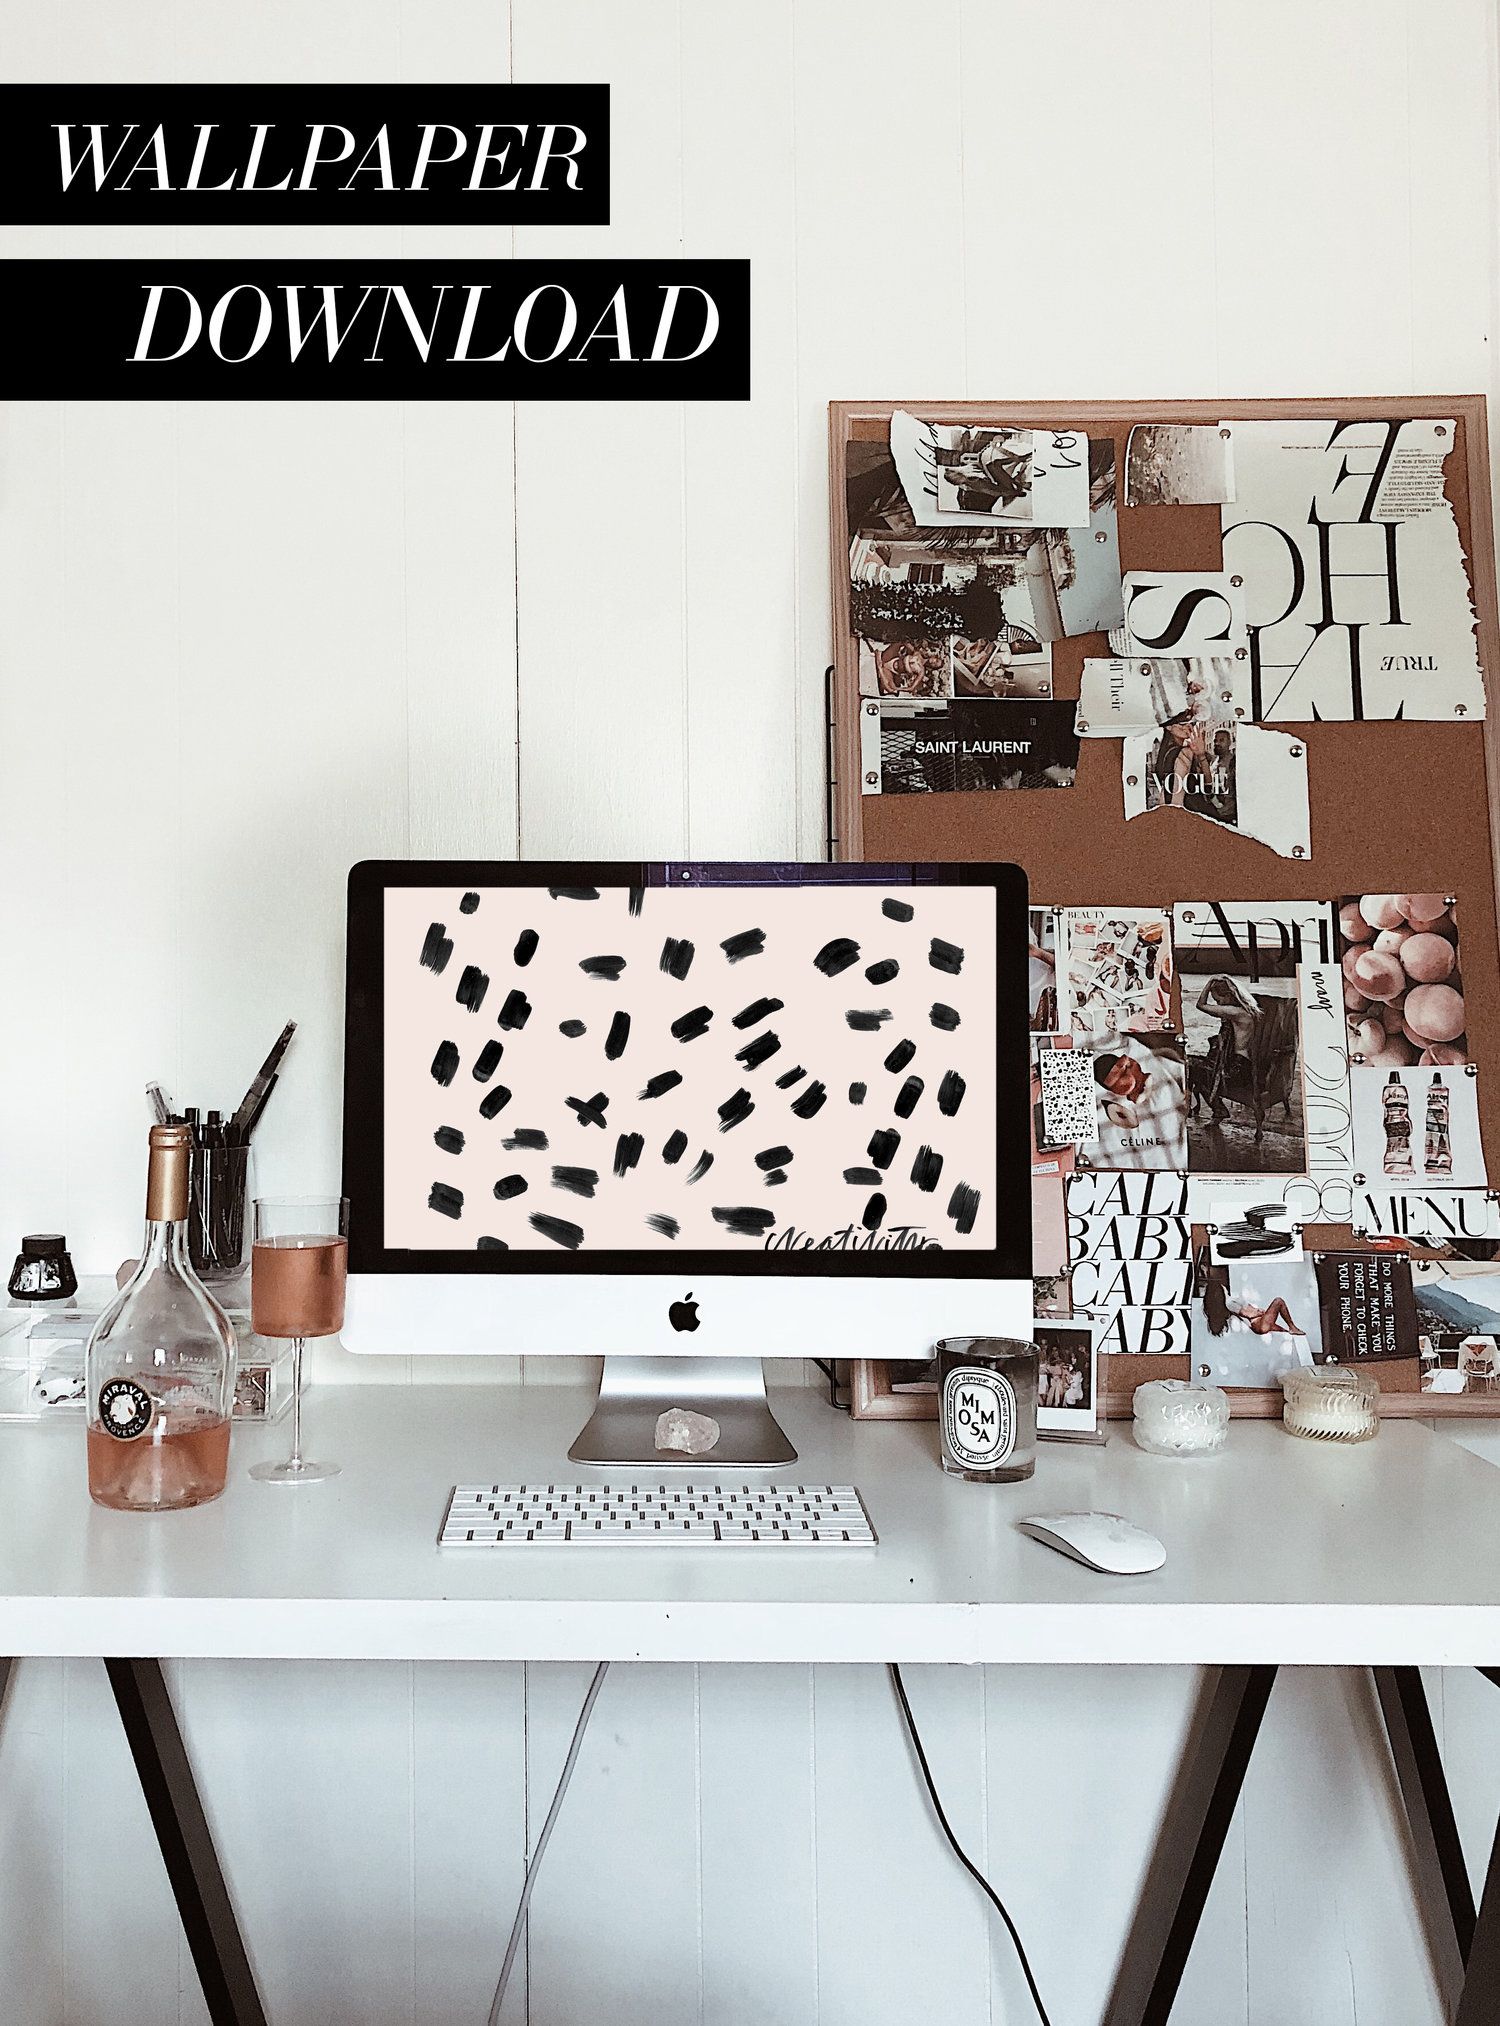 Free download FREE DOWNLOAD DESKTOP WALLPAPER DOWNLOAD Cute Office ...